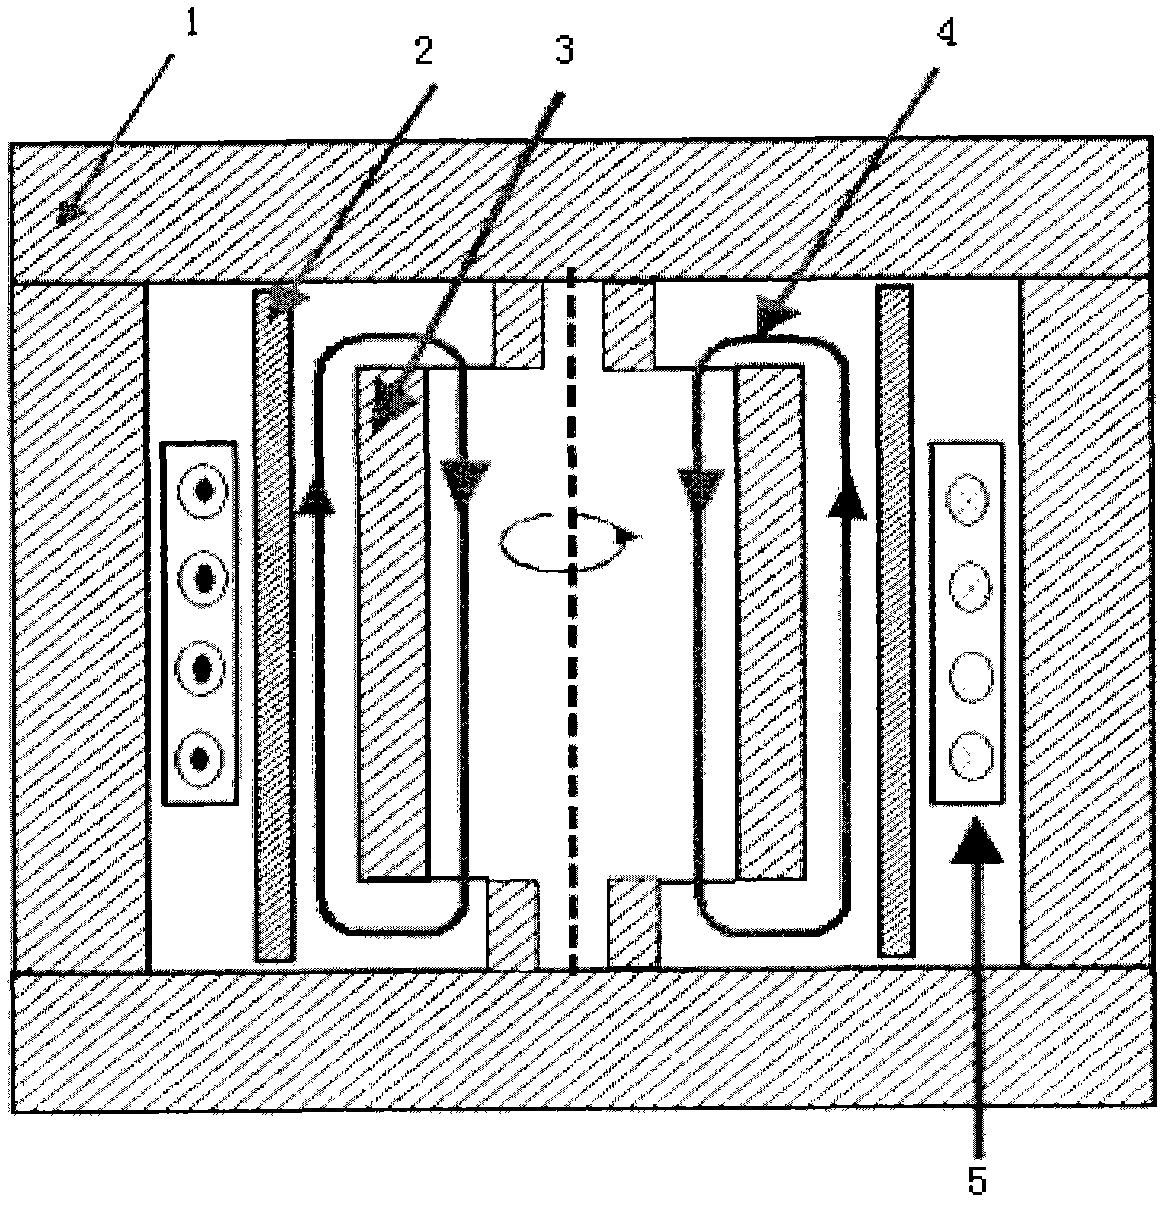 Vertical double excitation controllable electric reactor